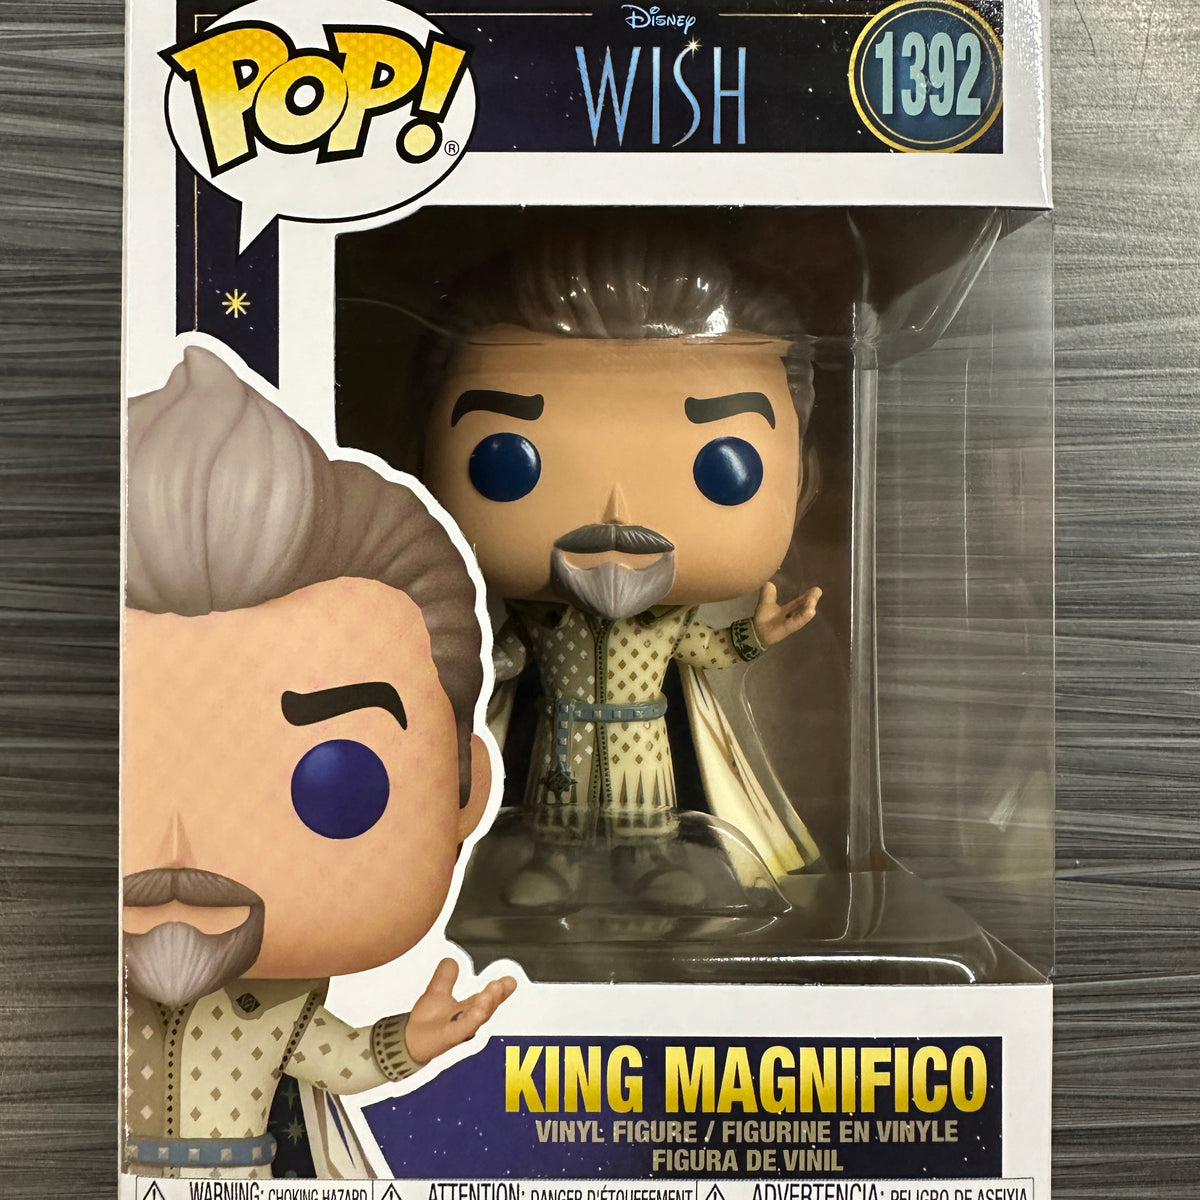 Funko POP! Disney: Wish - King Magnifico #1392 — The Pop Plug